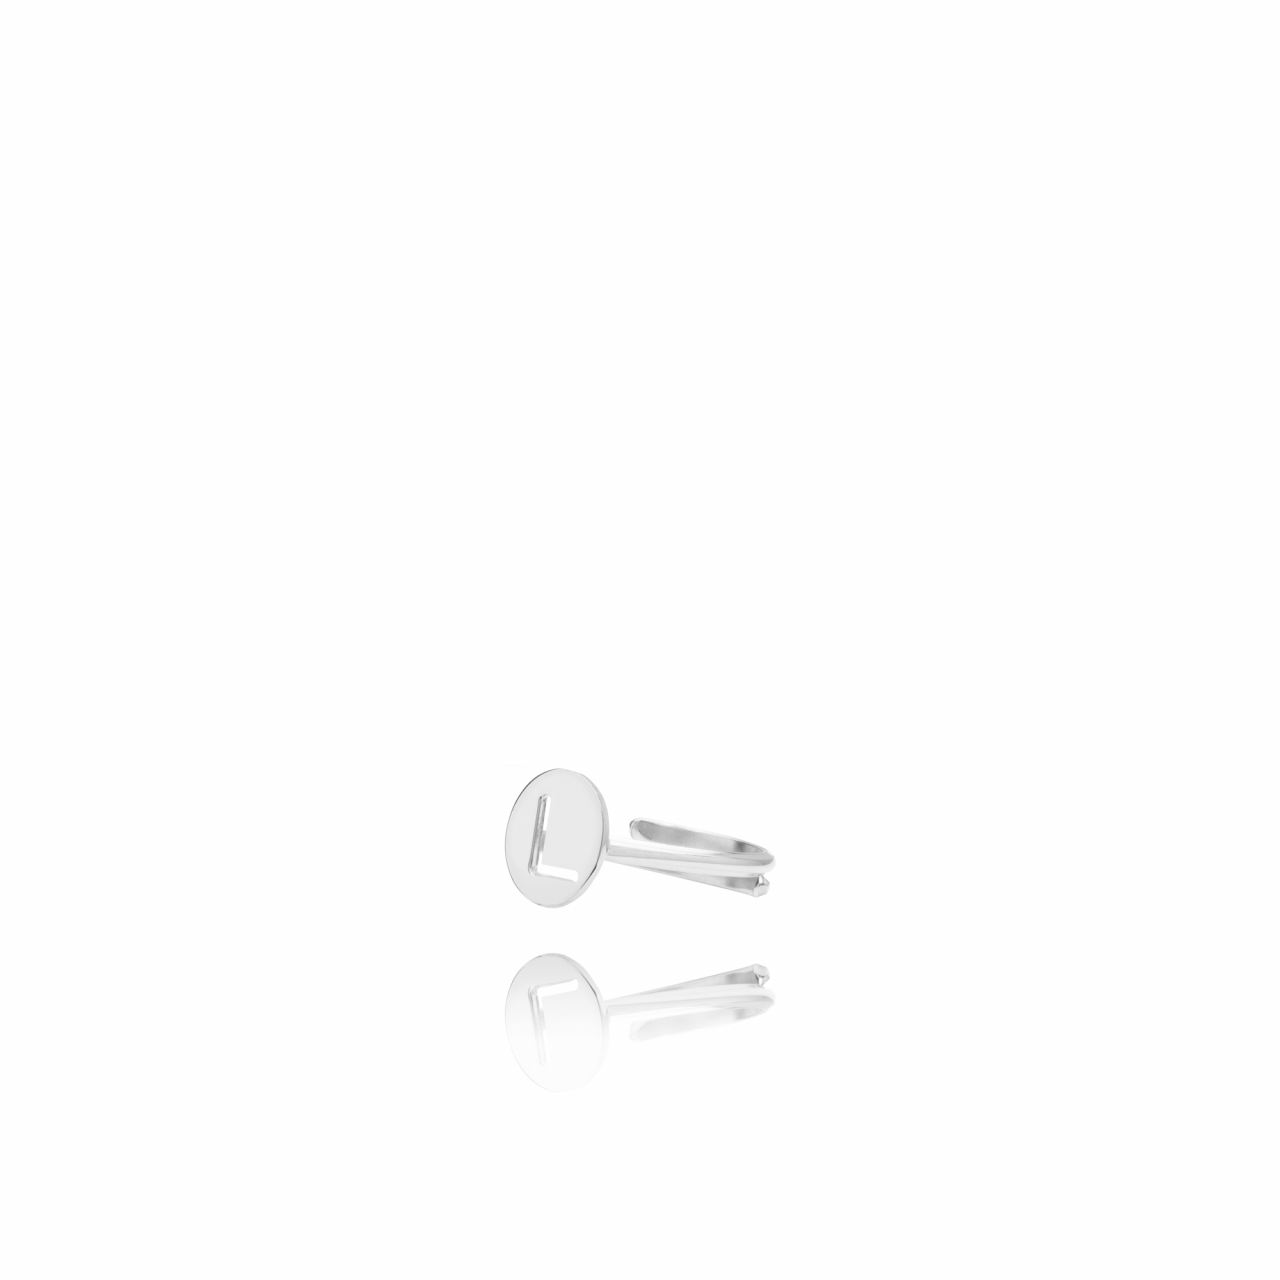 Zilveren ring Initial Smalllott-theme.productDescriptionPage.SEO.byTheBrand